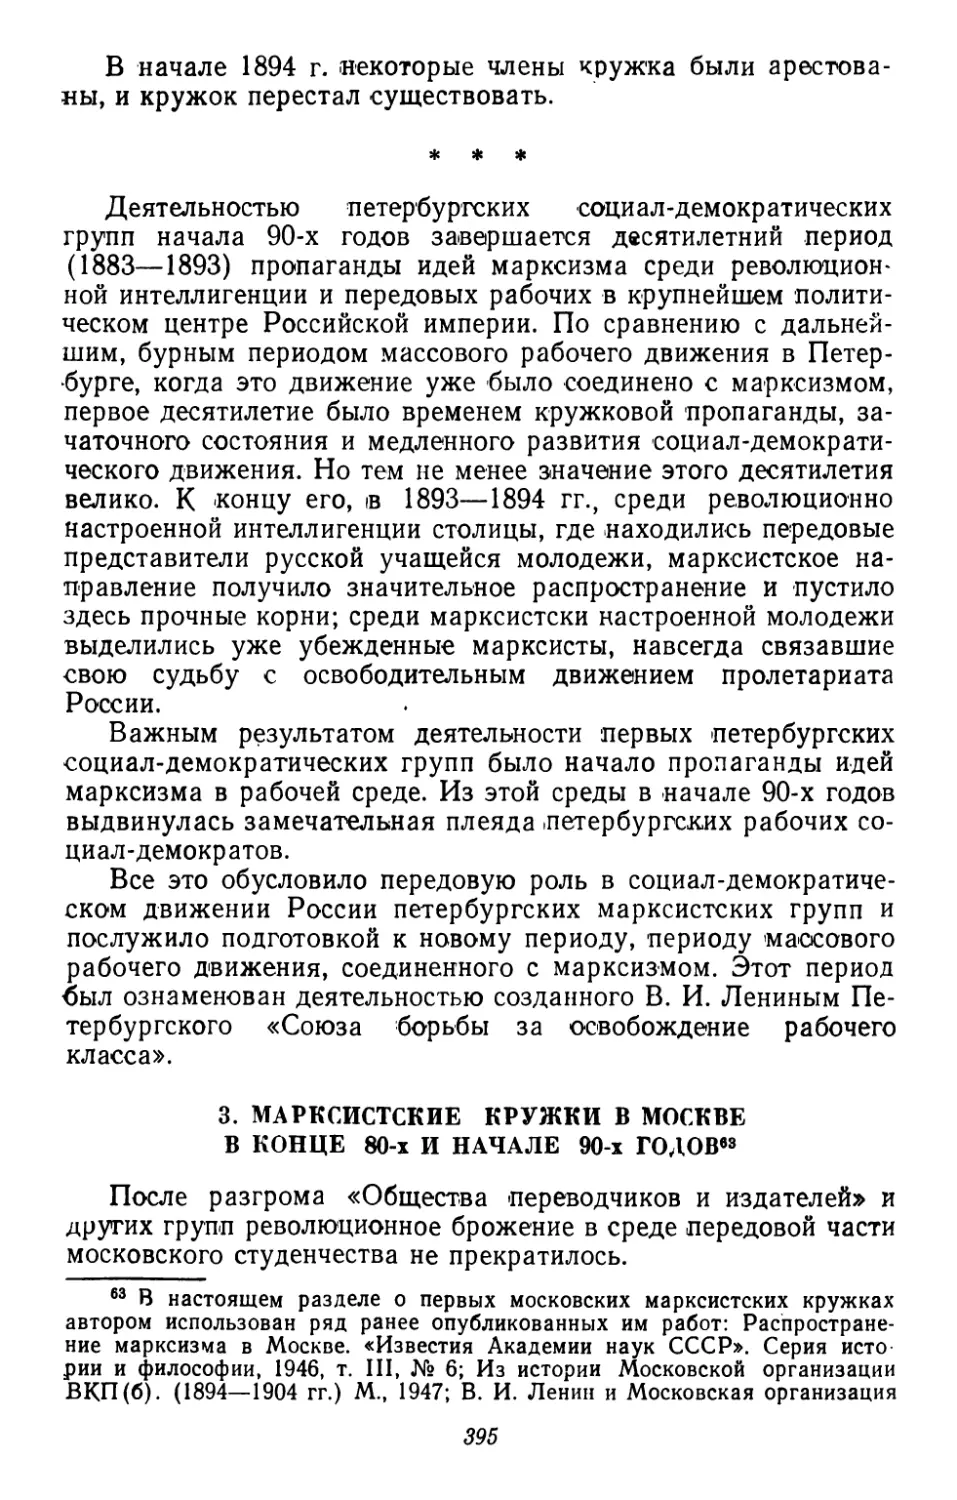 3. Марксистские социал-демократические кружки в Москве в конце 80-х — начале 90-х годов